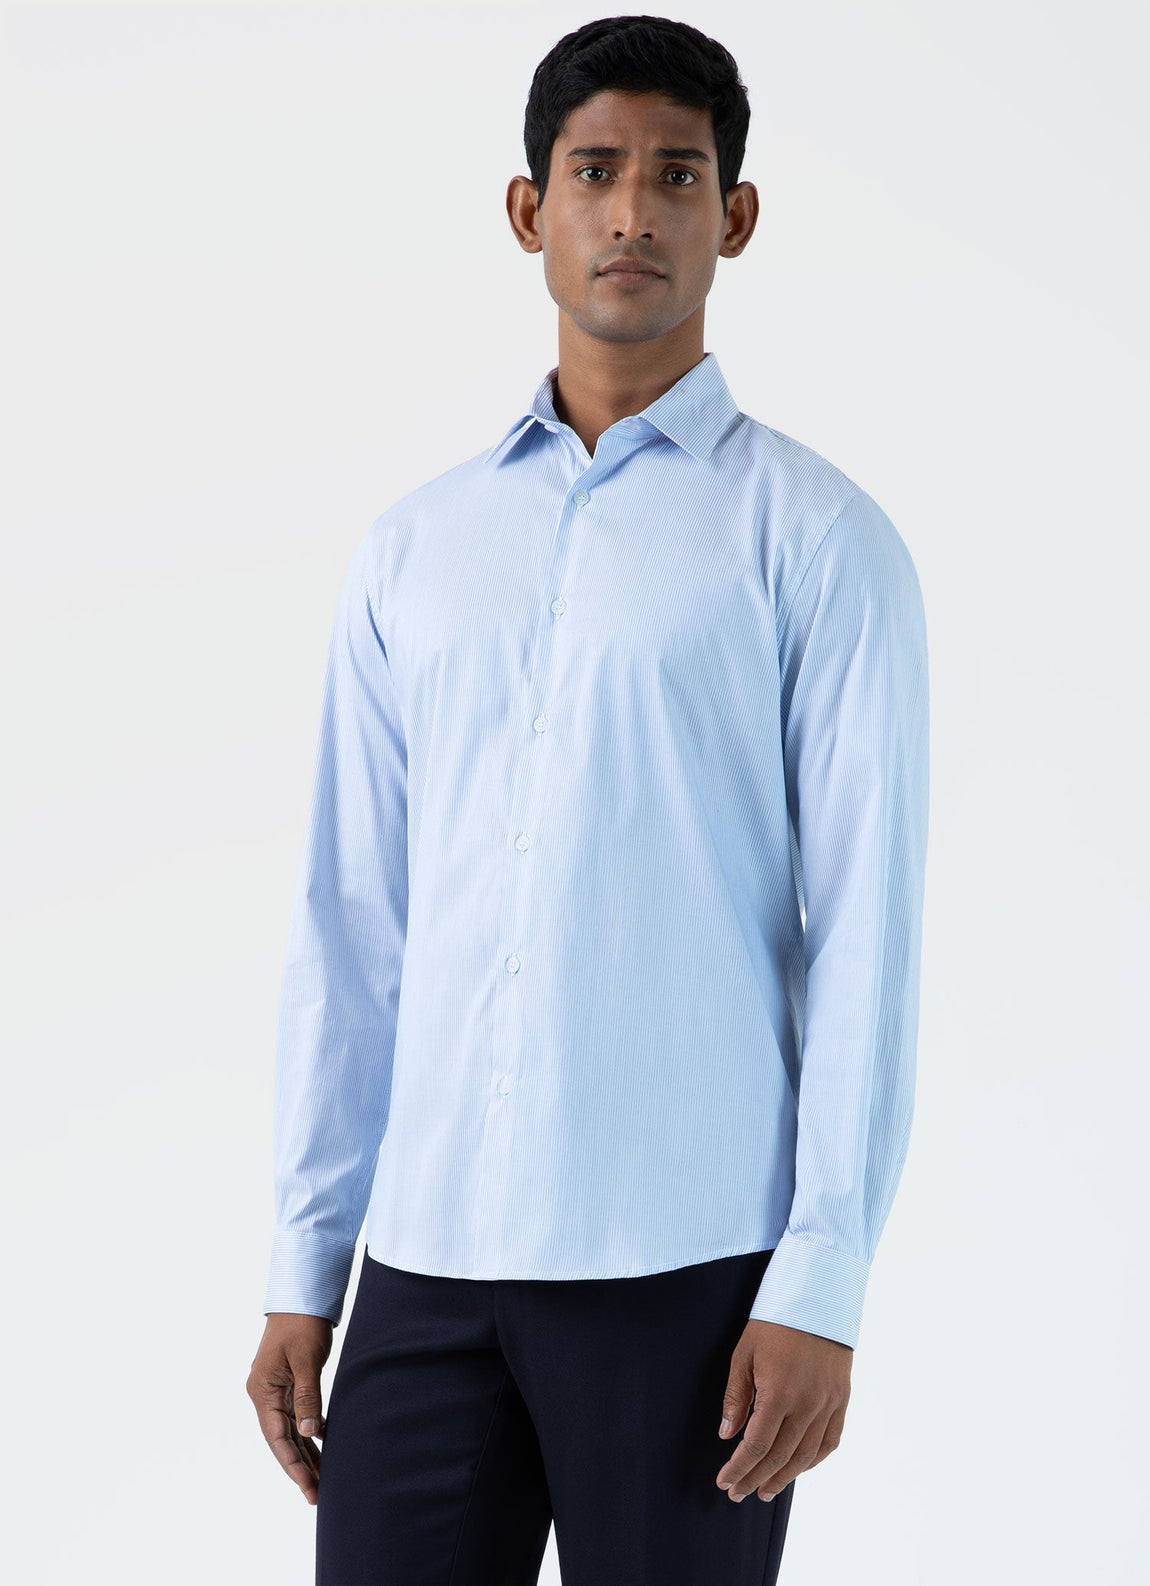 Men's Cotton Stretch Shirt in Light Blue/White